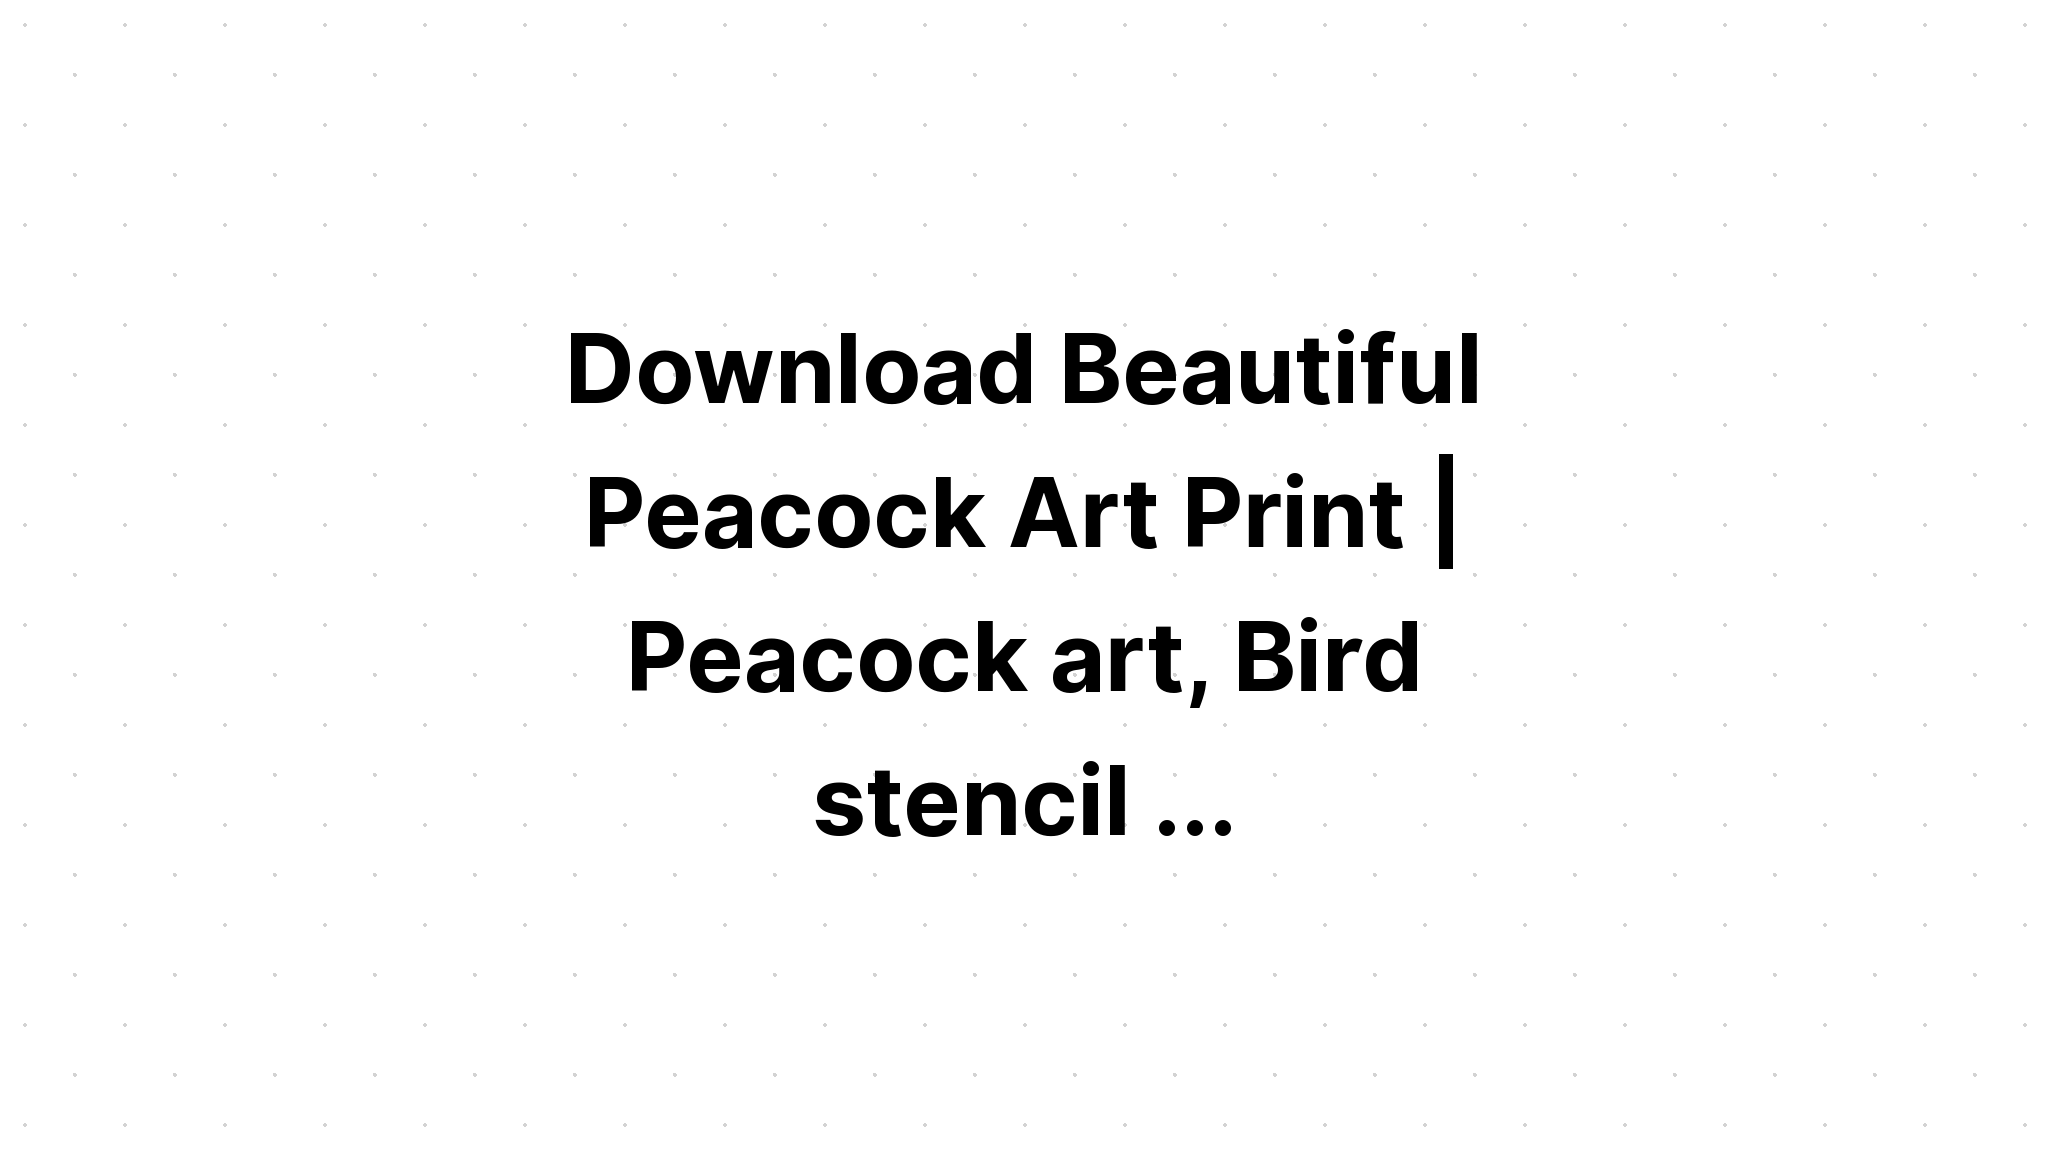 Download Mandala Peacock Svg Design - Layered SVG Cut File